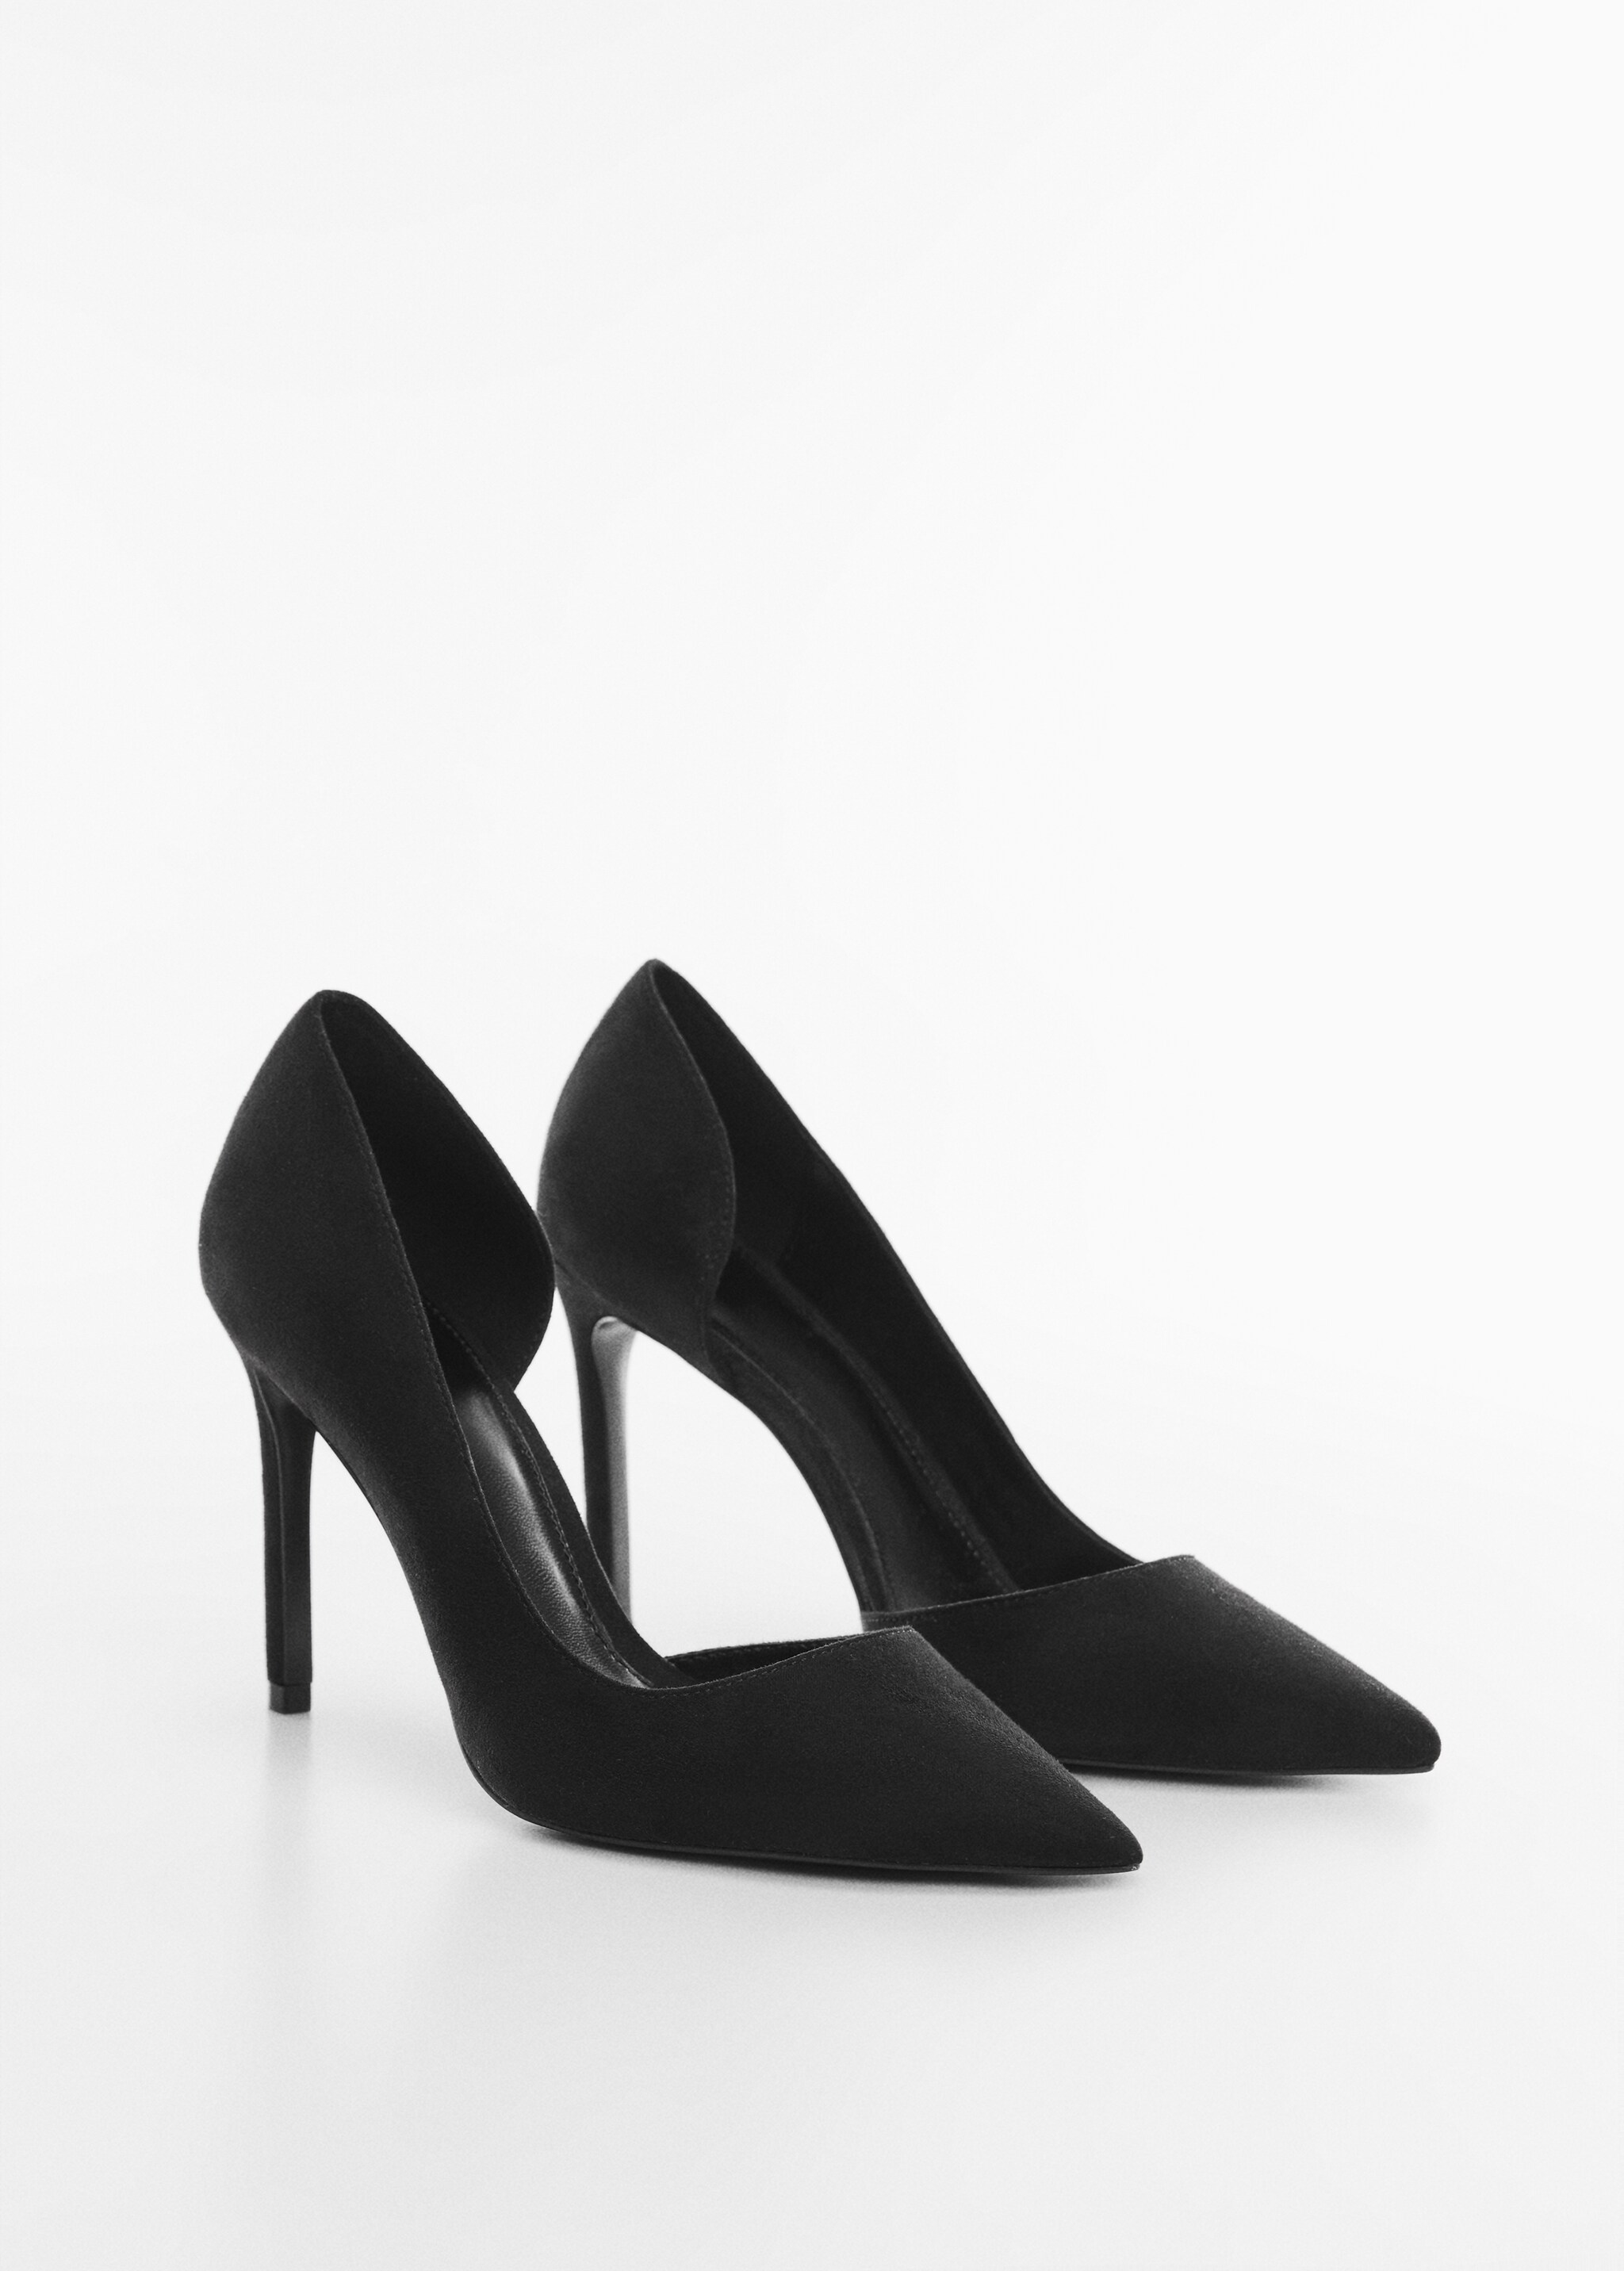 Asymmetrical heeled shoes - Medium plane